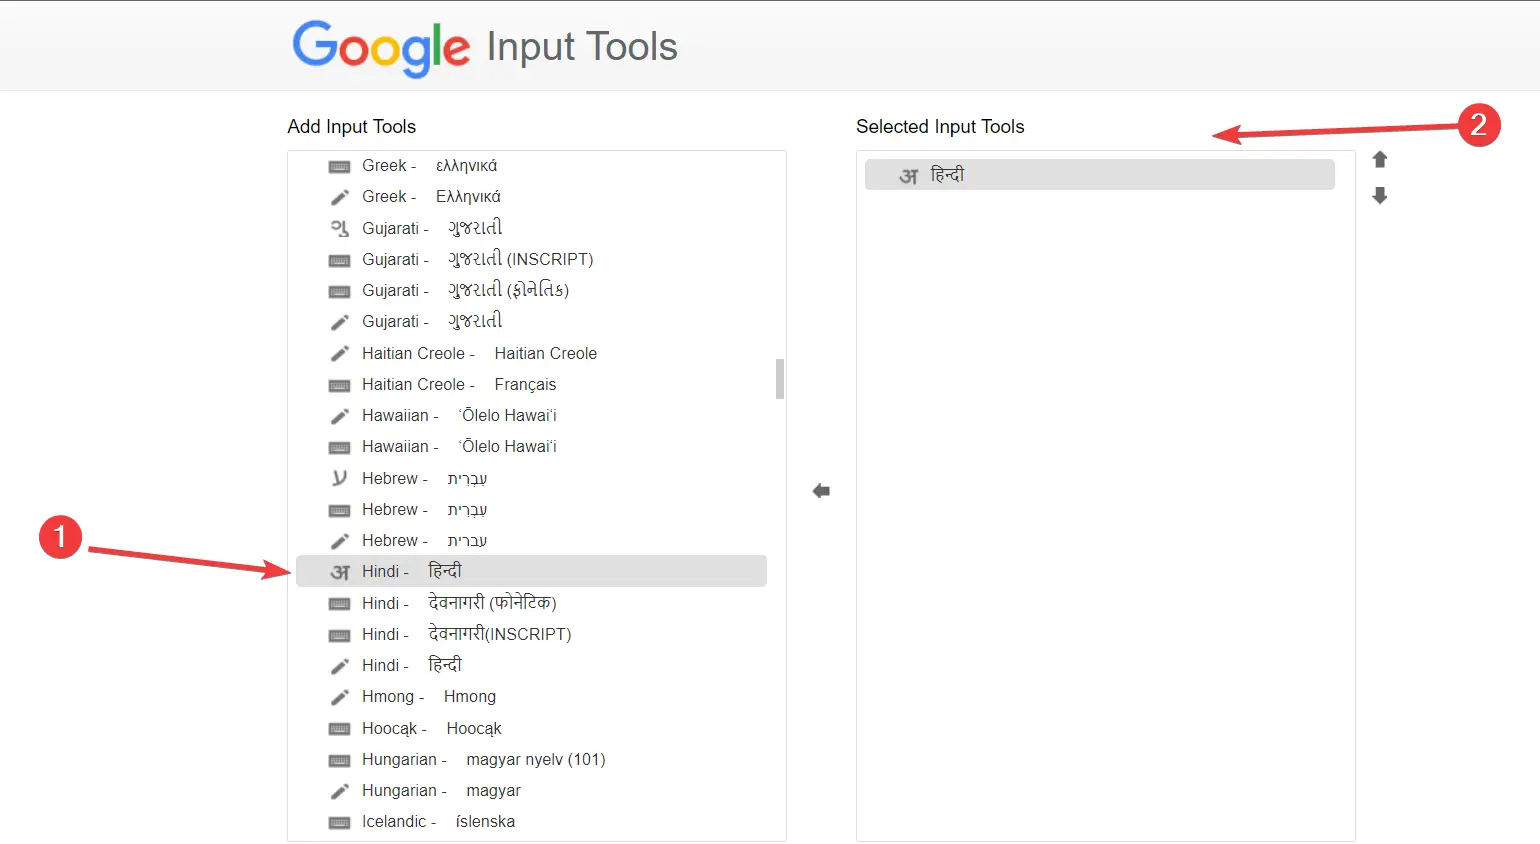 adding language to selected input tools